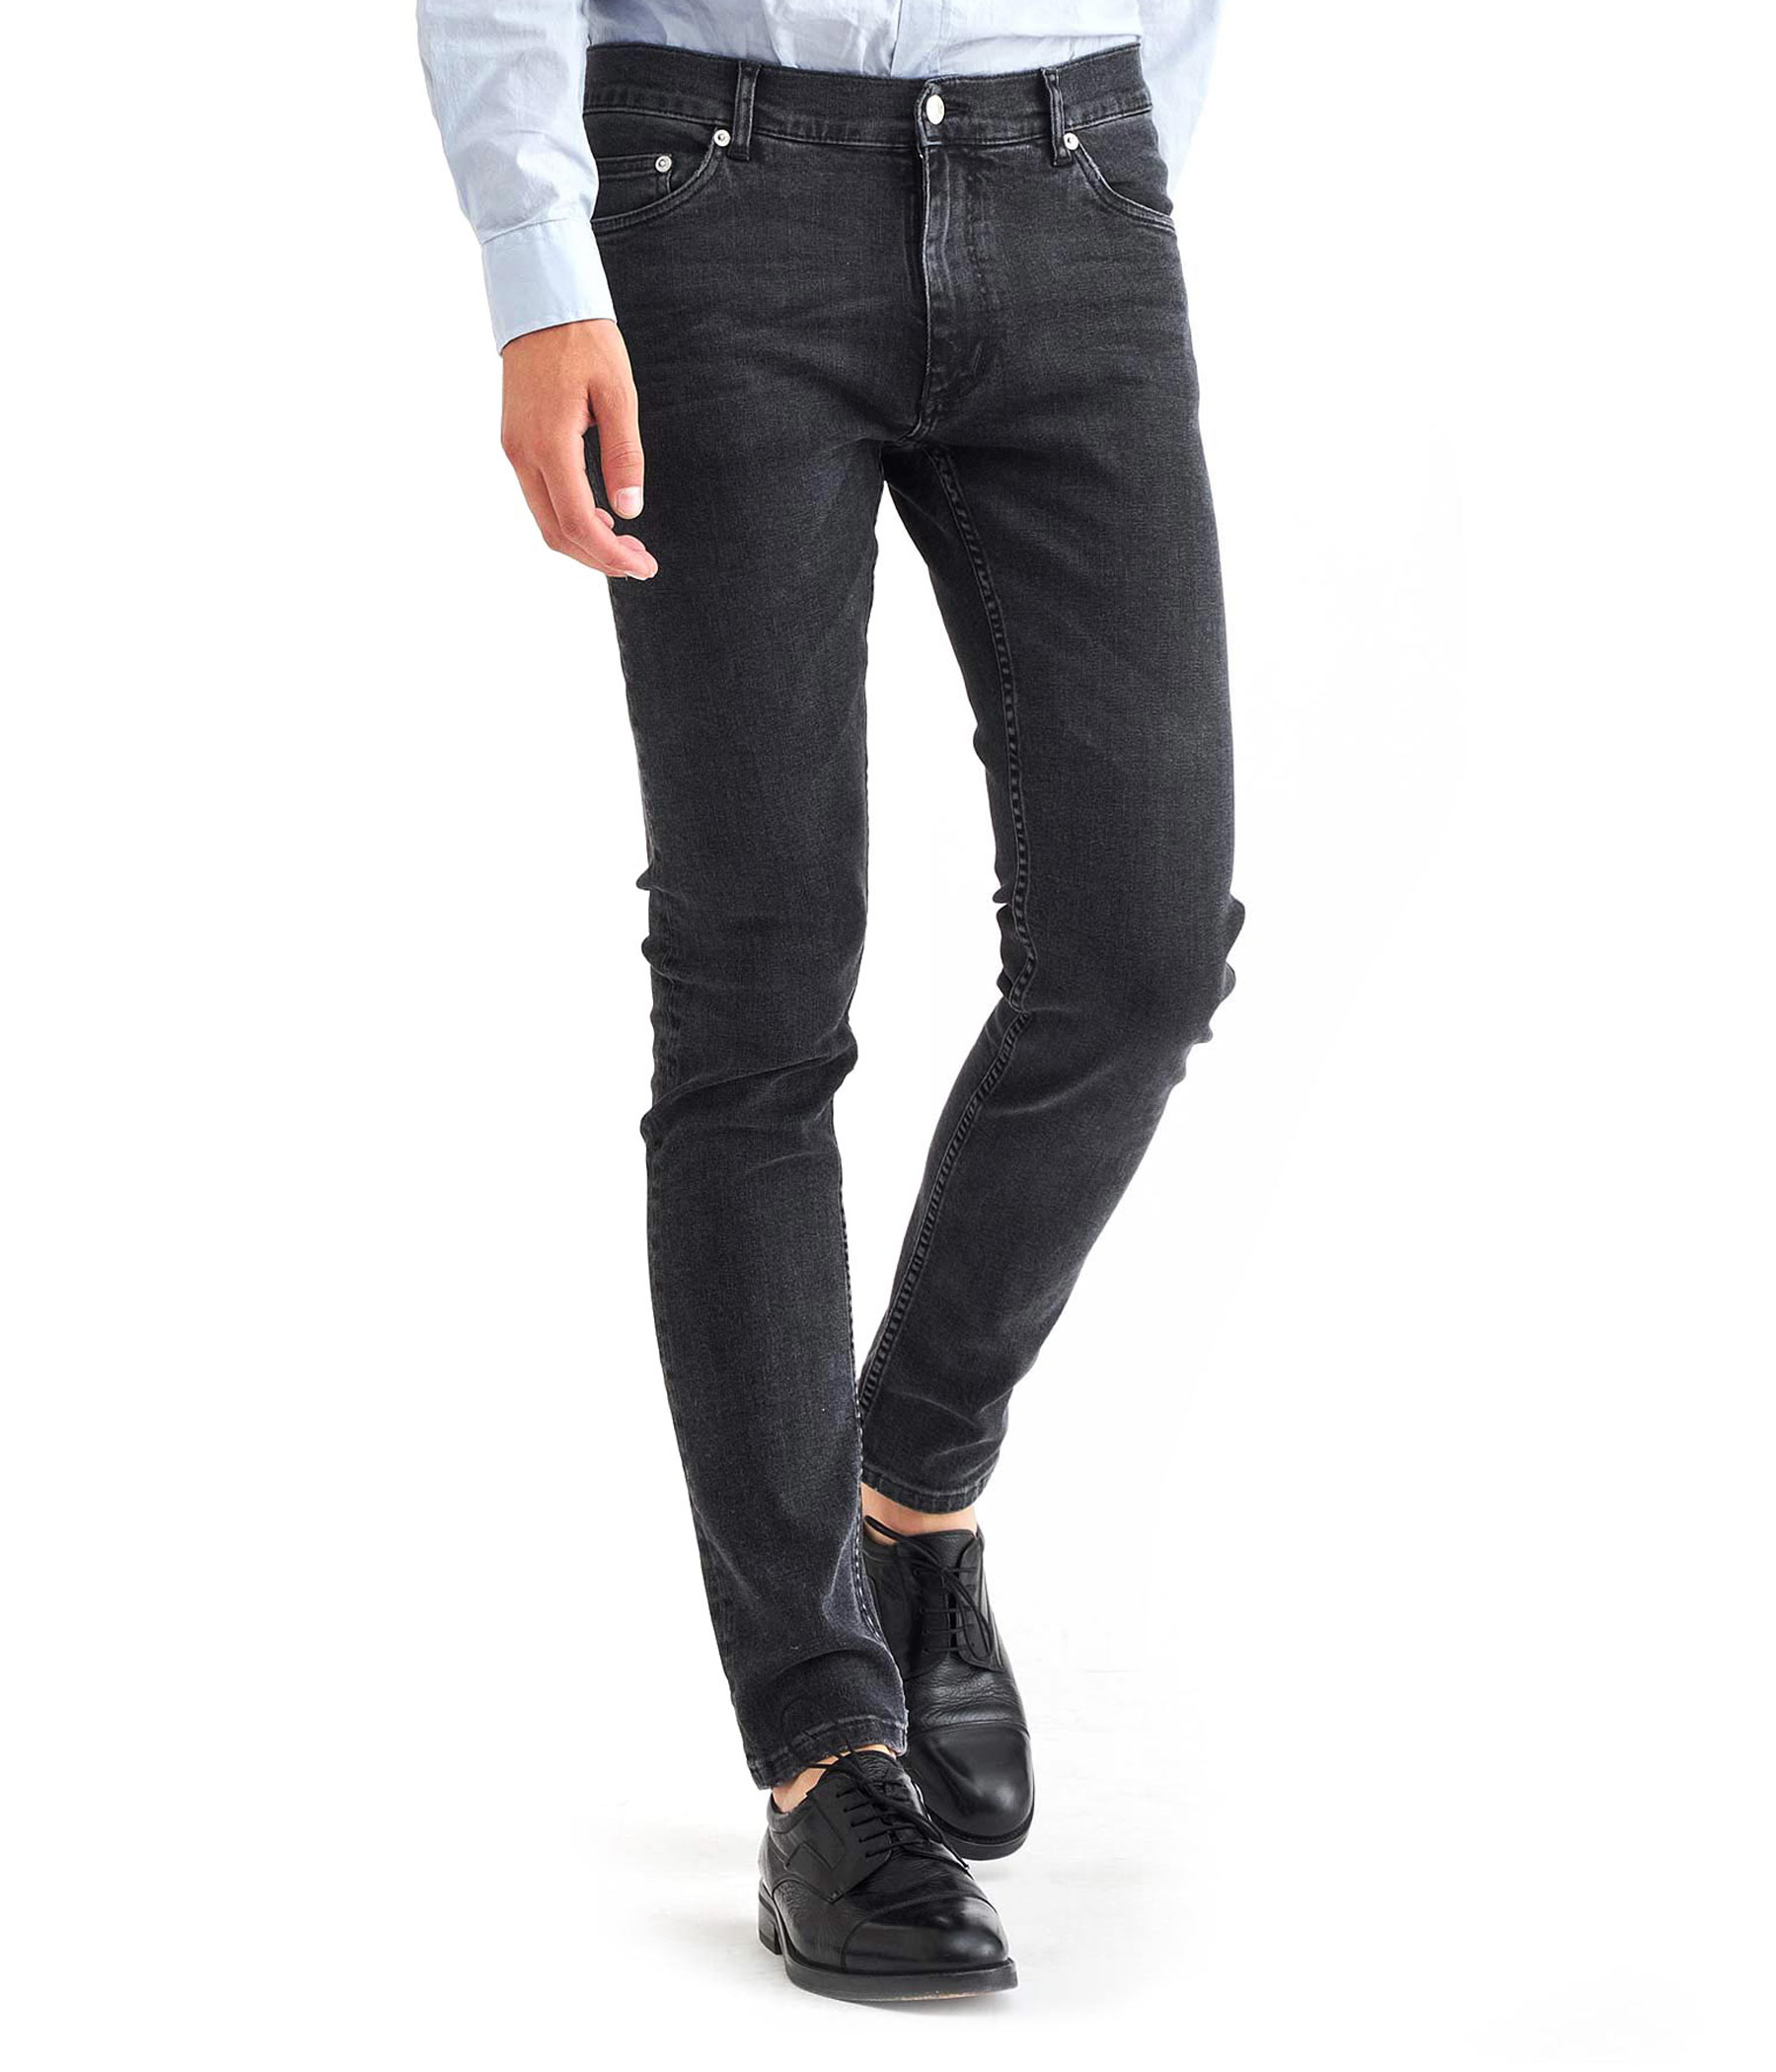 black velour jeans